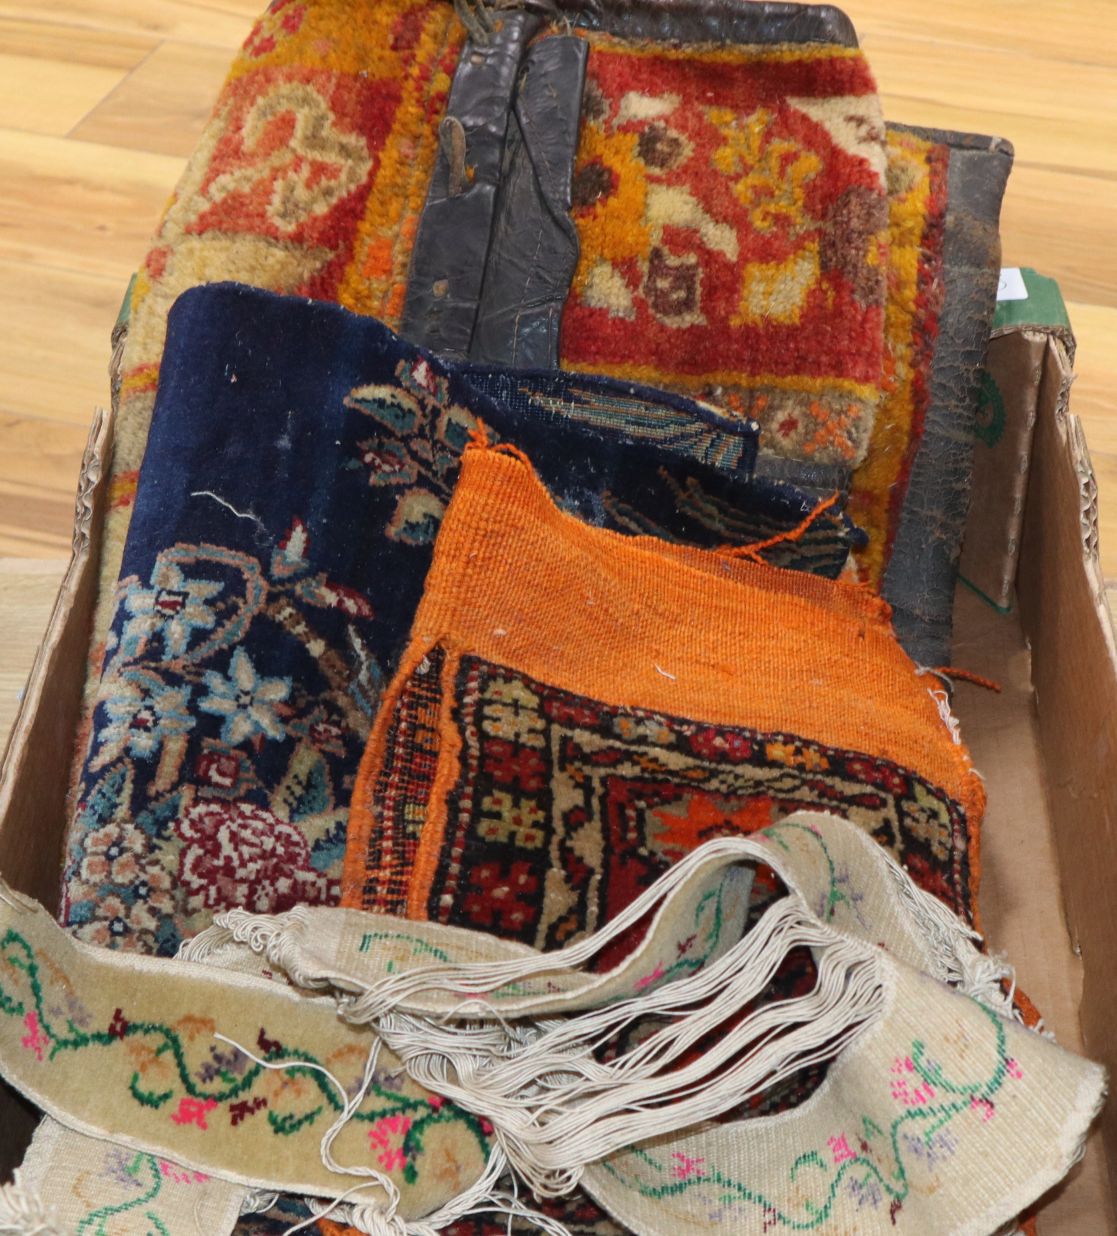 A carpet saddle bag, various carpet samples and carpet shoe uppers